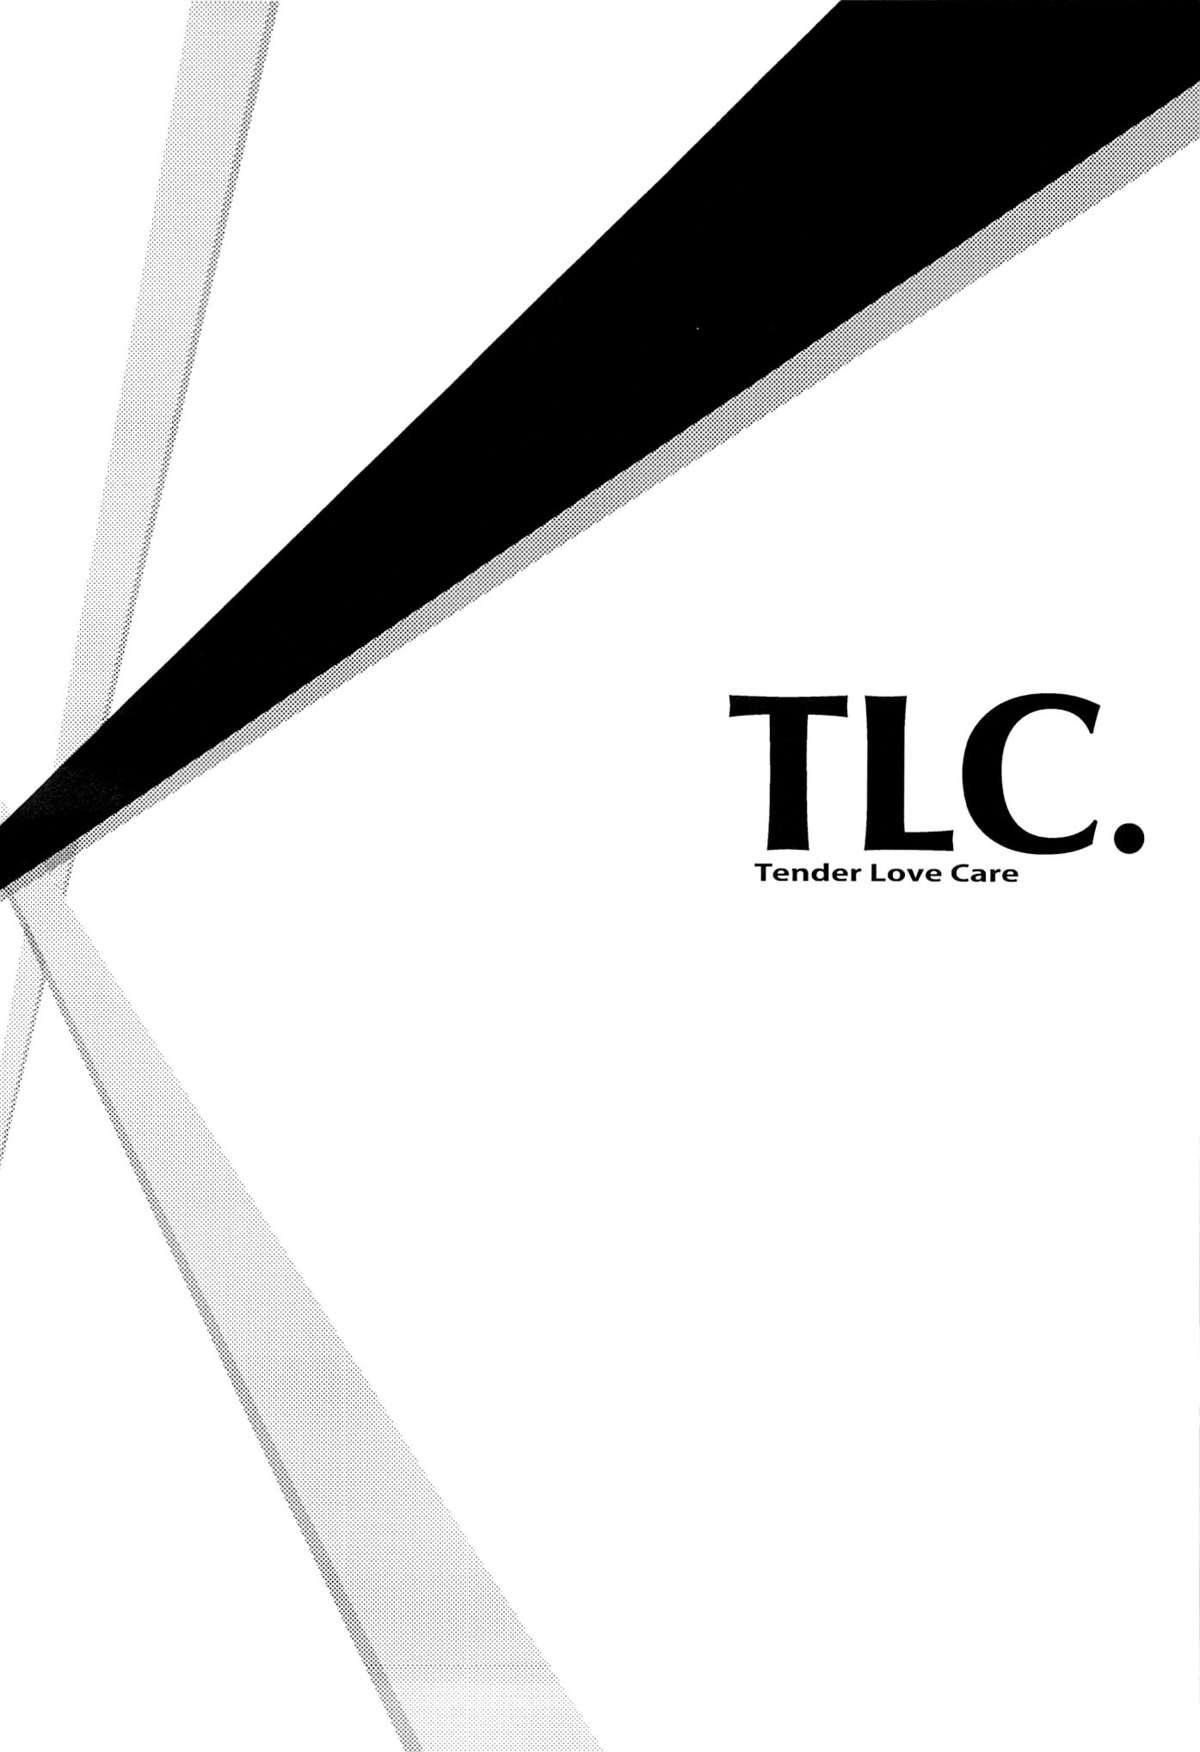 TLC. Tender Love Care 2